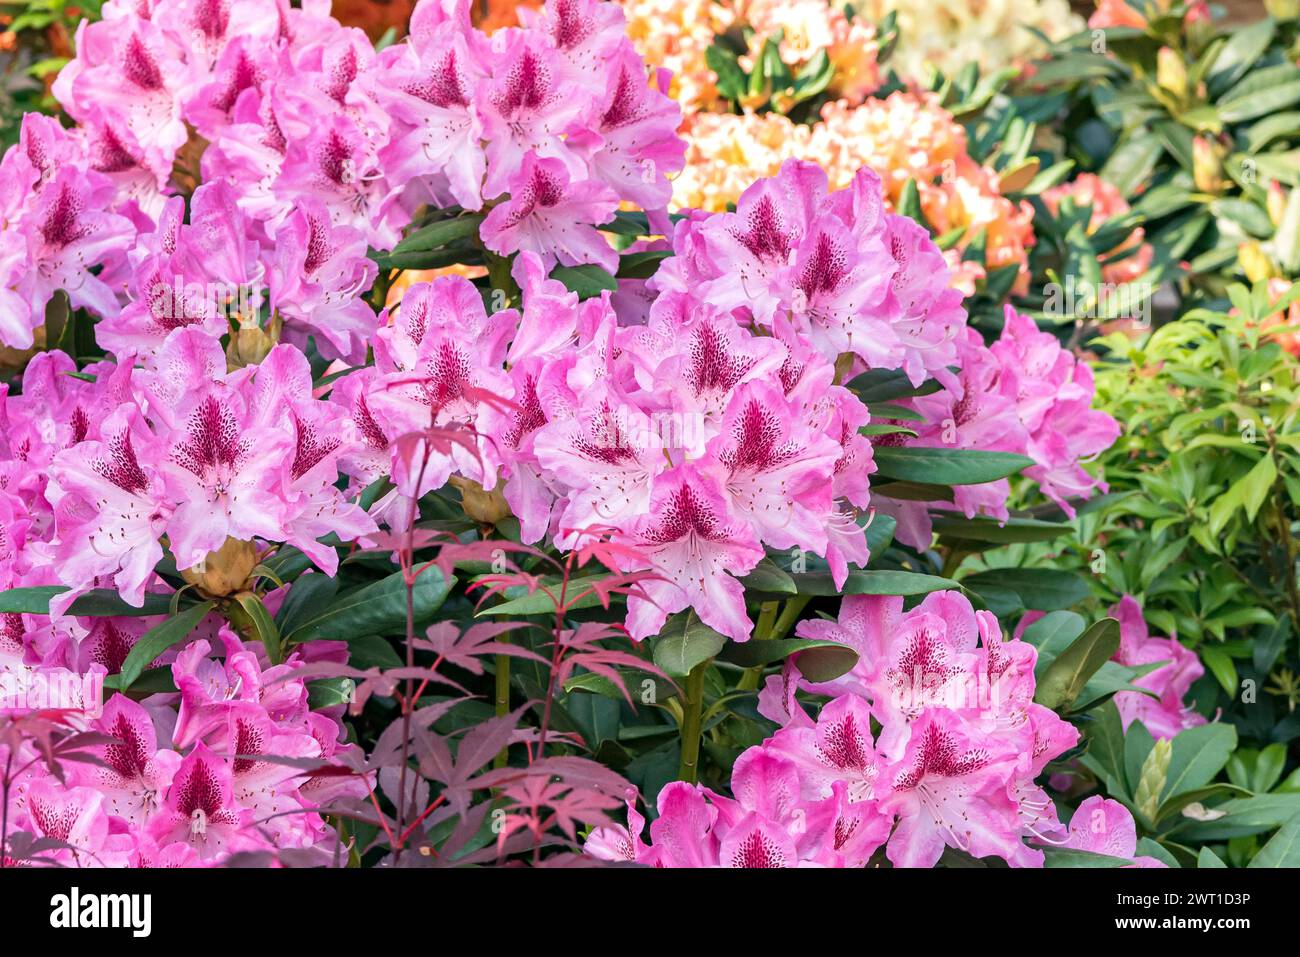 rhododendron (Rhododendron 'Cosmopolitan', Rhododendron Cosmopolitan), fioritura, cultivar Cosmopolitan Foto Stock